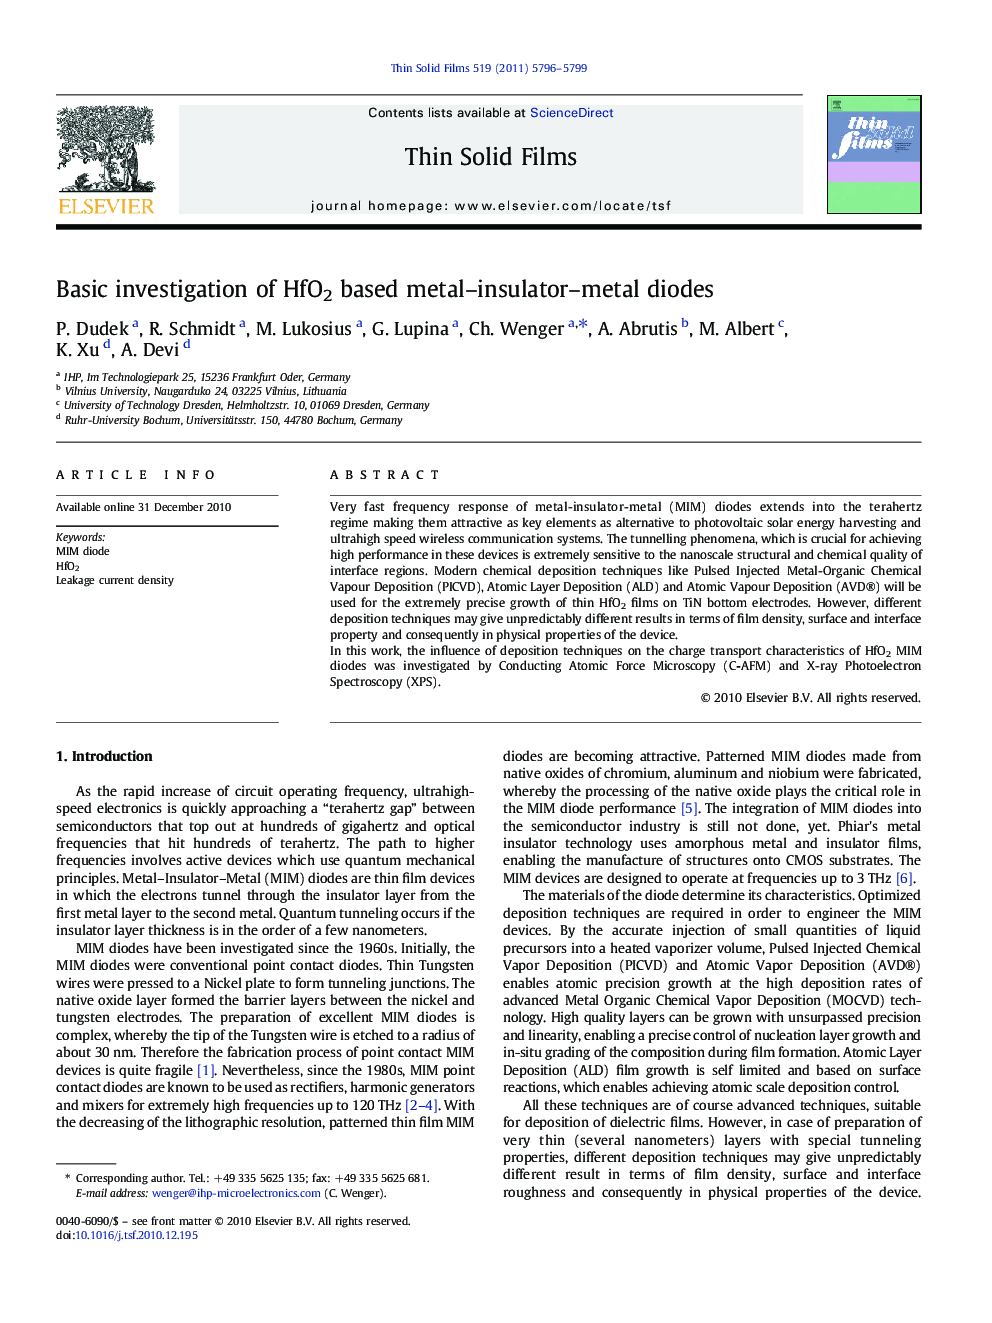 Basic investigation of HfO2 based metal–insulator–metal diodes